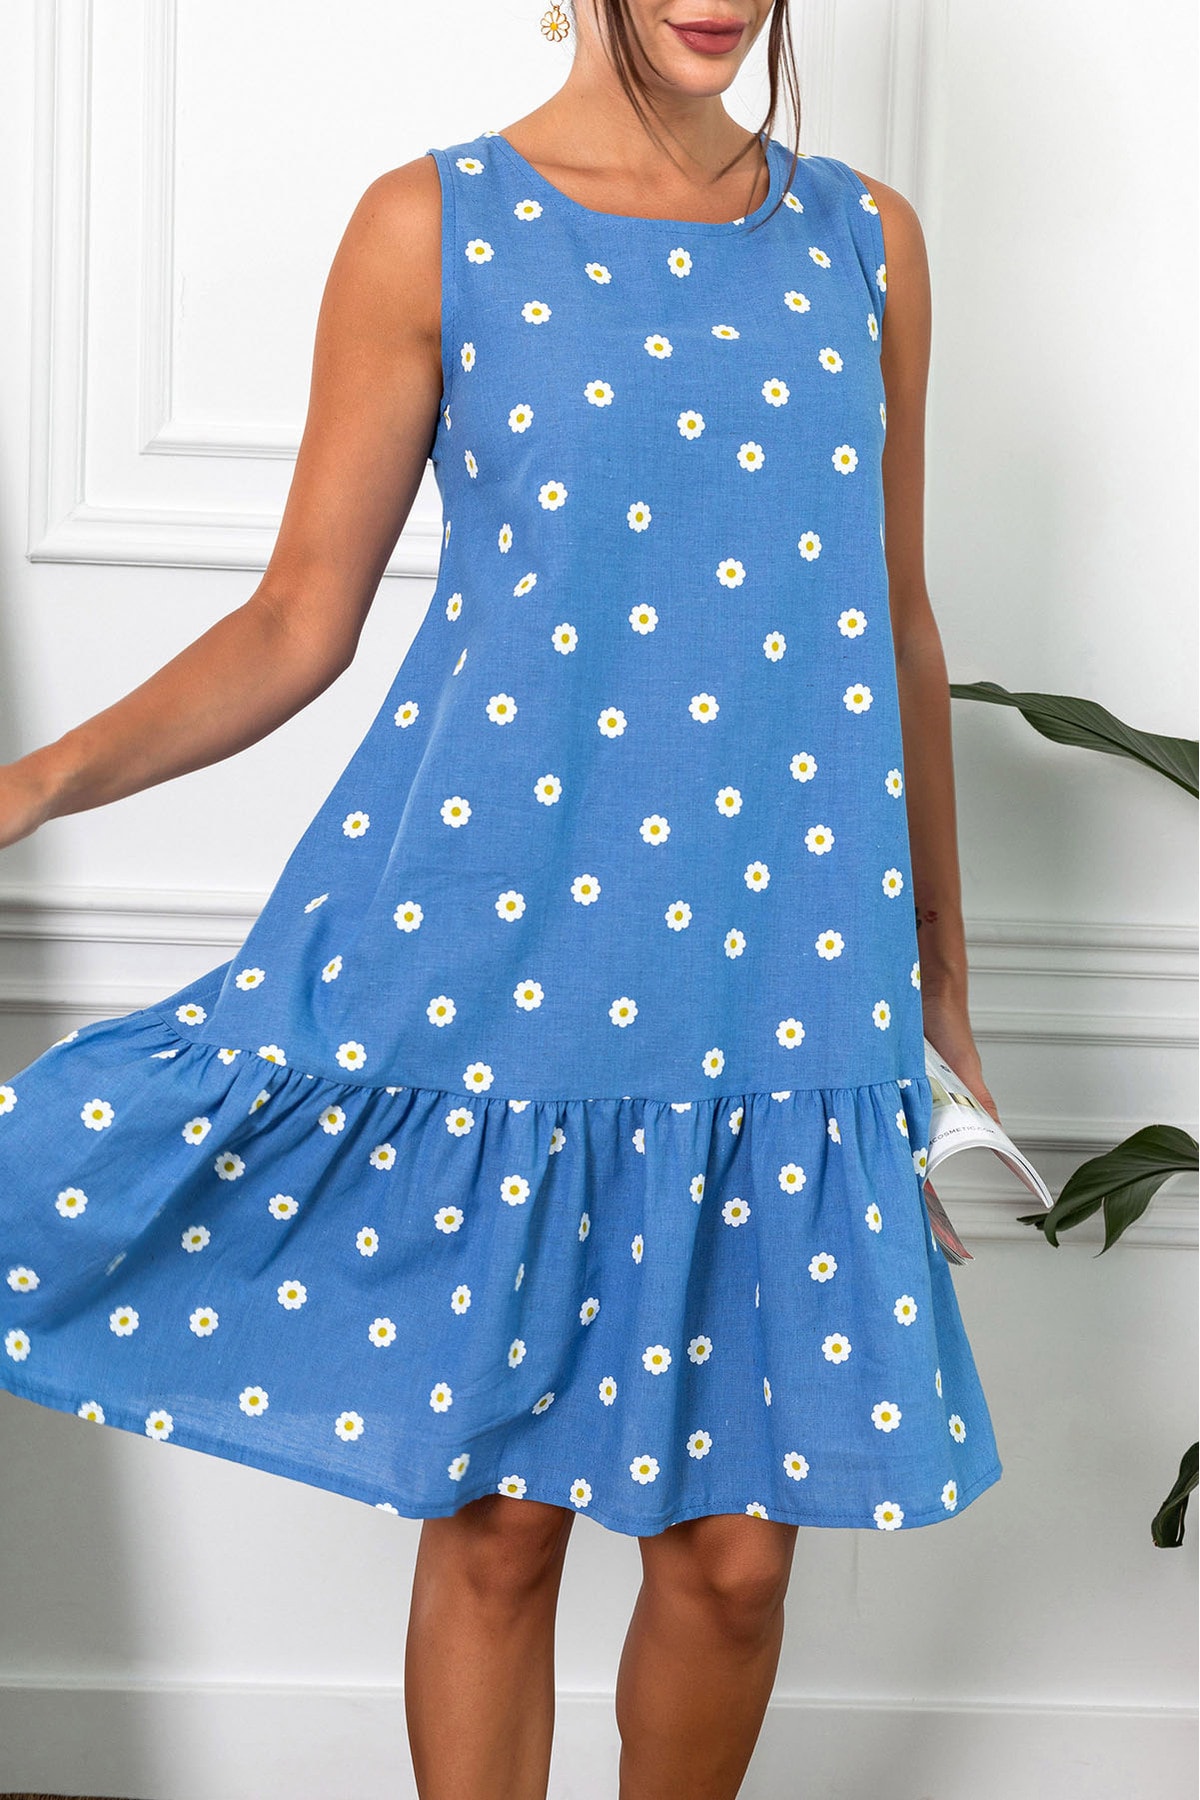 armonika Women's Blue Daisy Pattern Sleeveless Frilly Skirt Dress